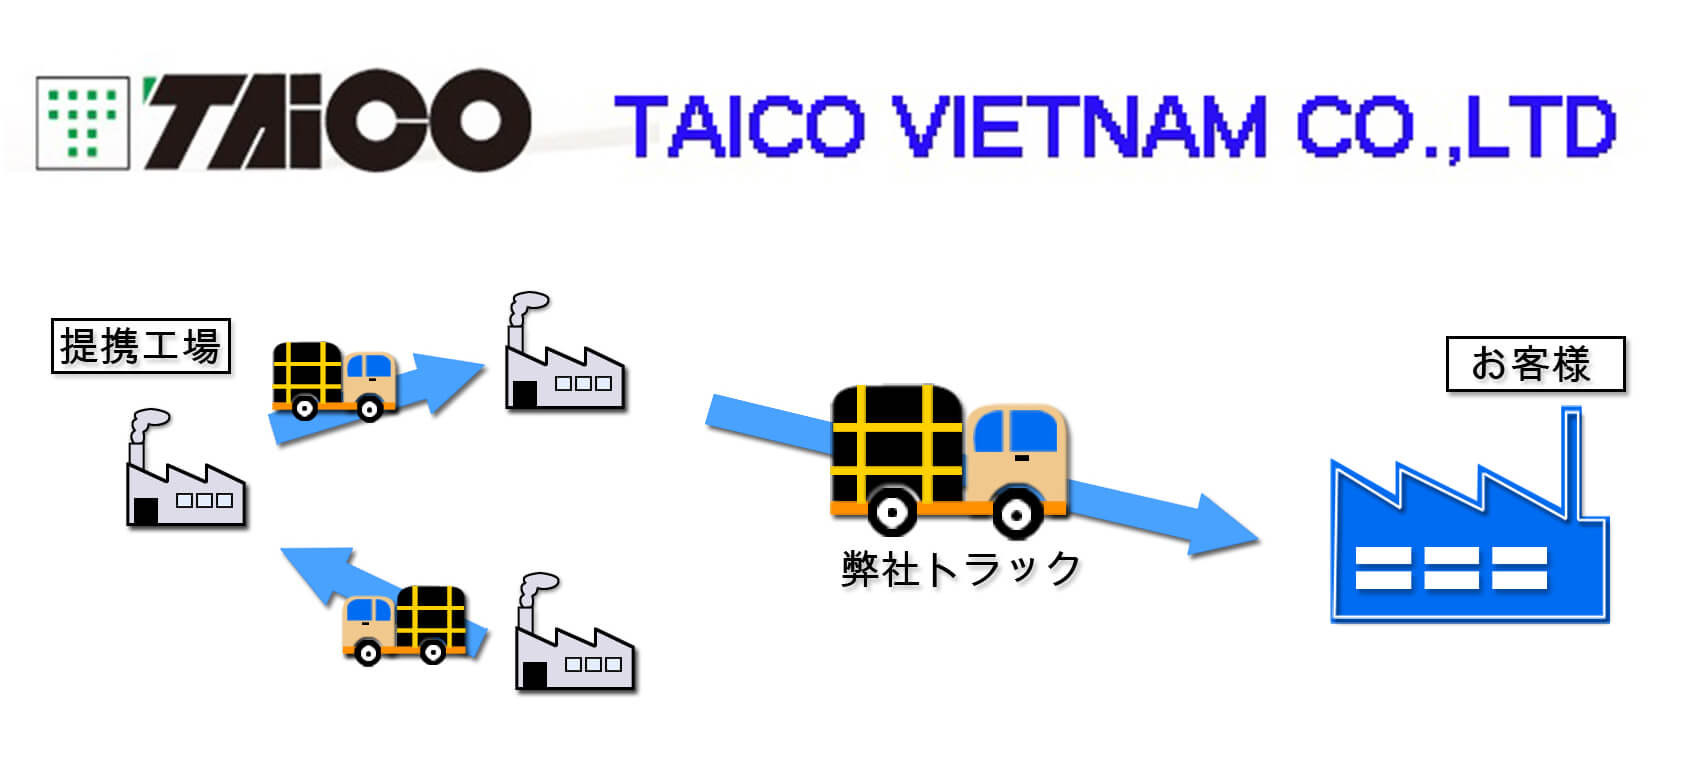 TAICO VIETNAM CO.,LTD